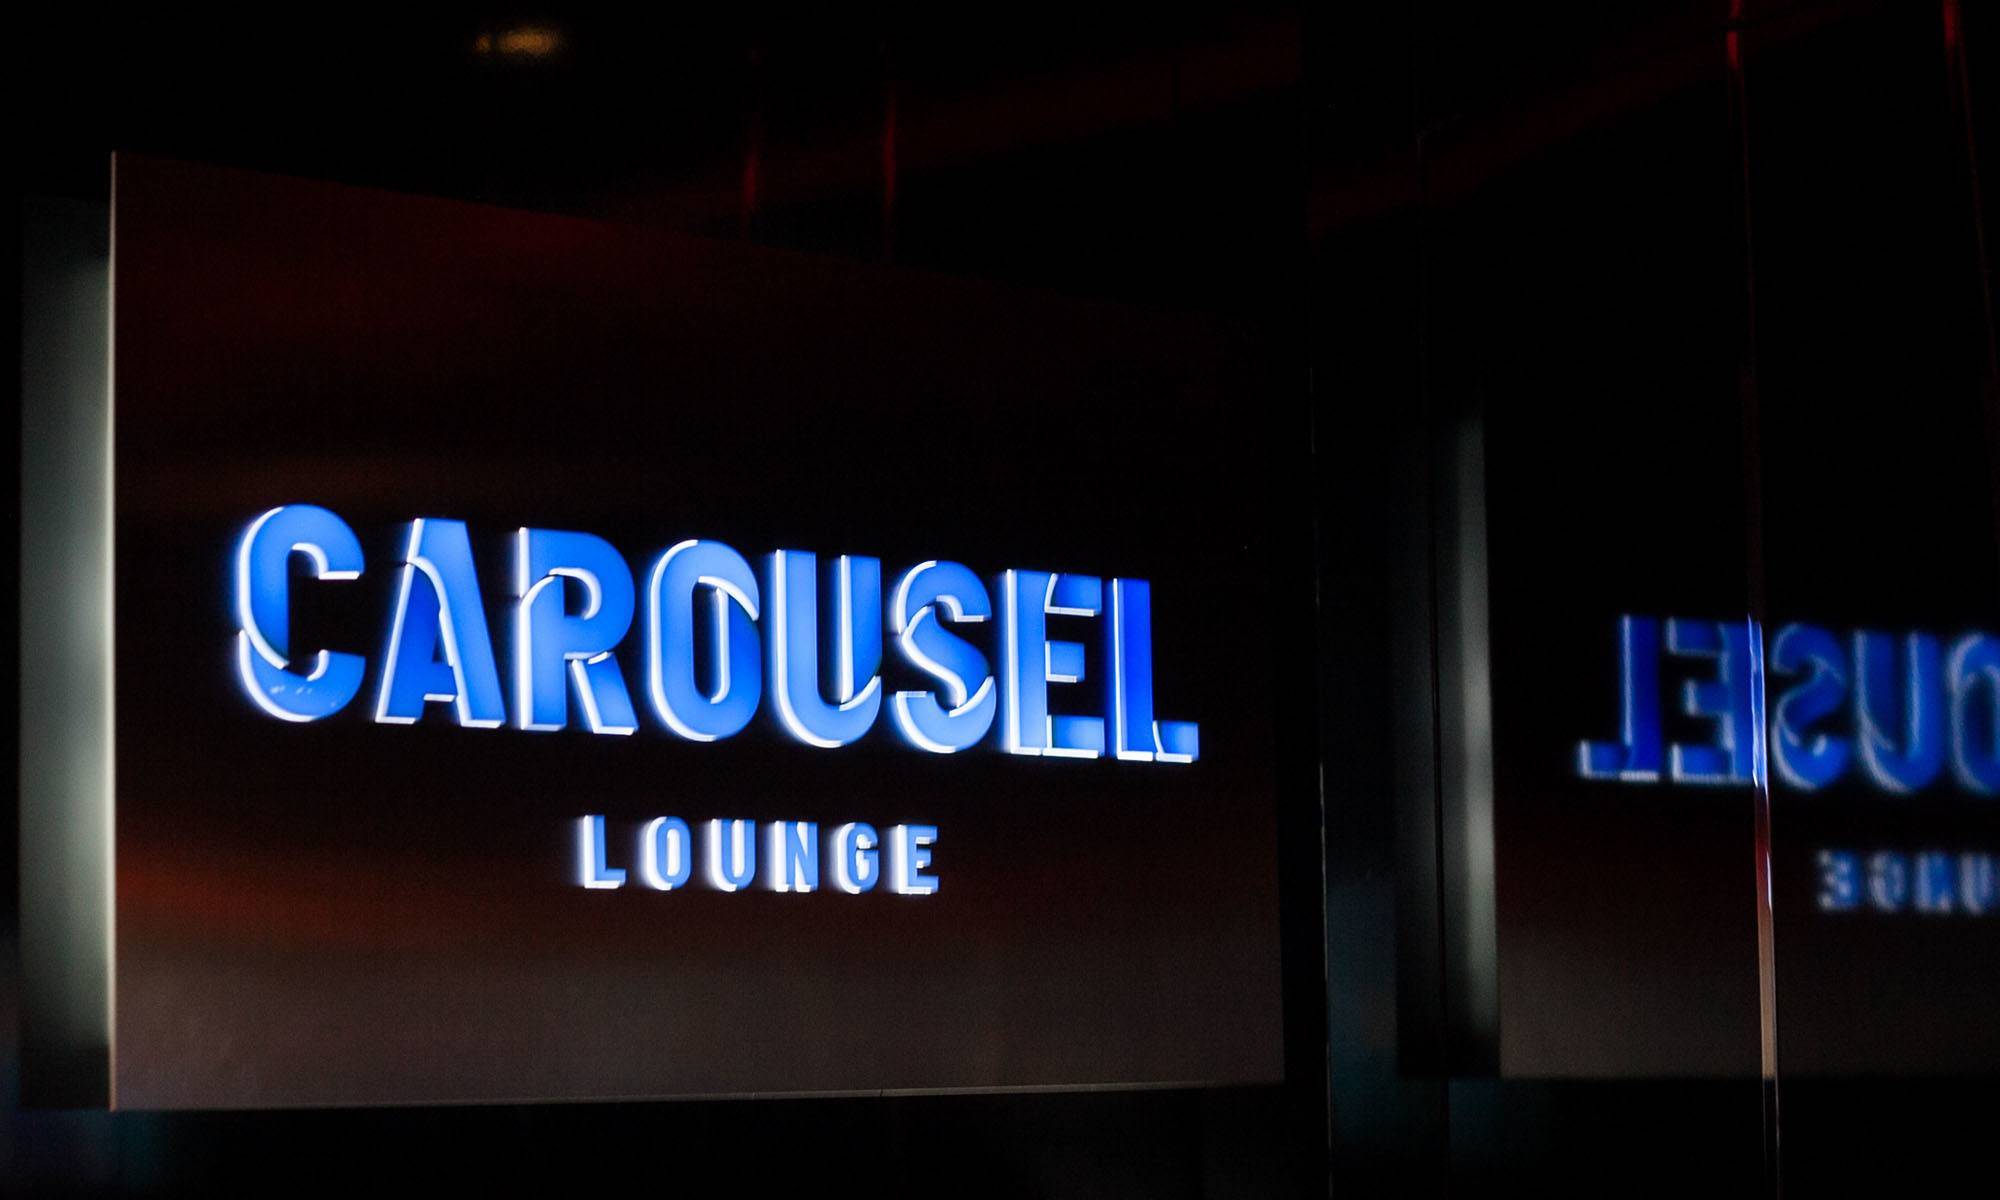 Meraviglia Carousel Lounge